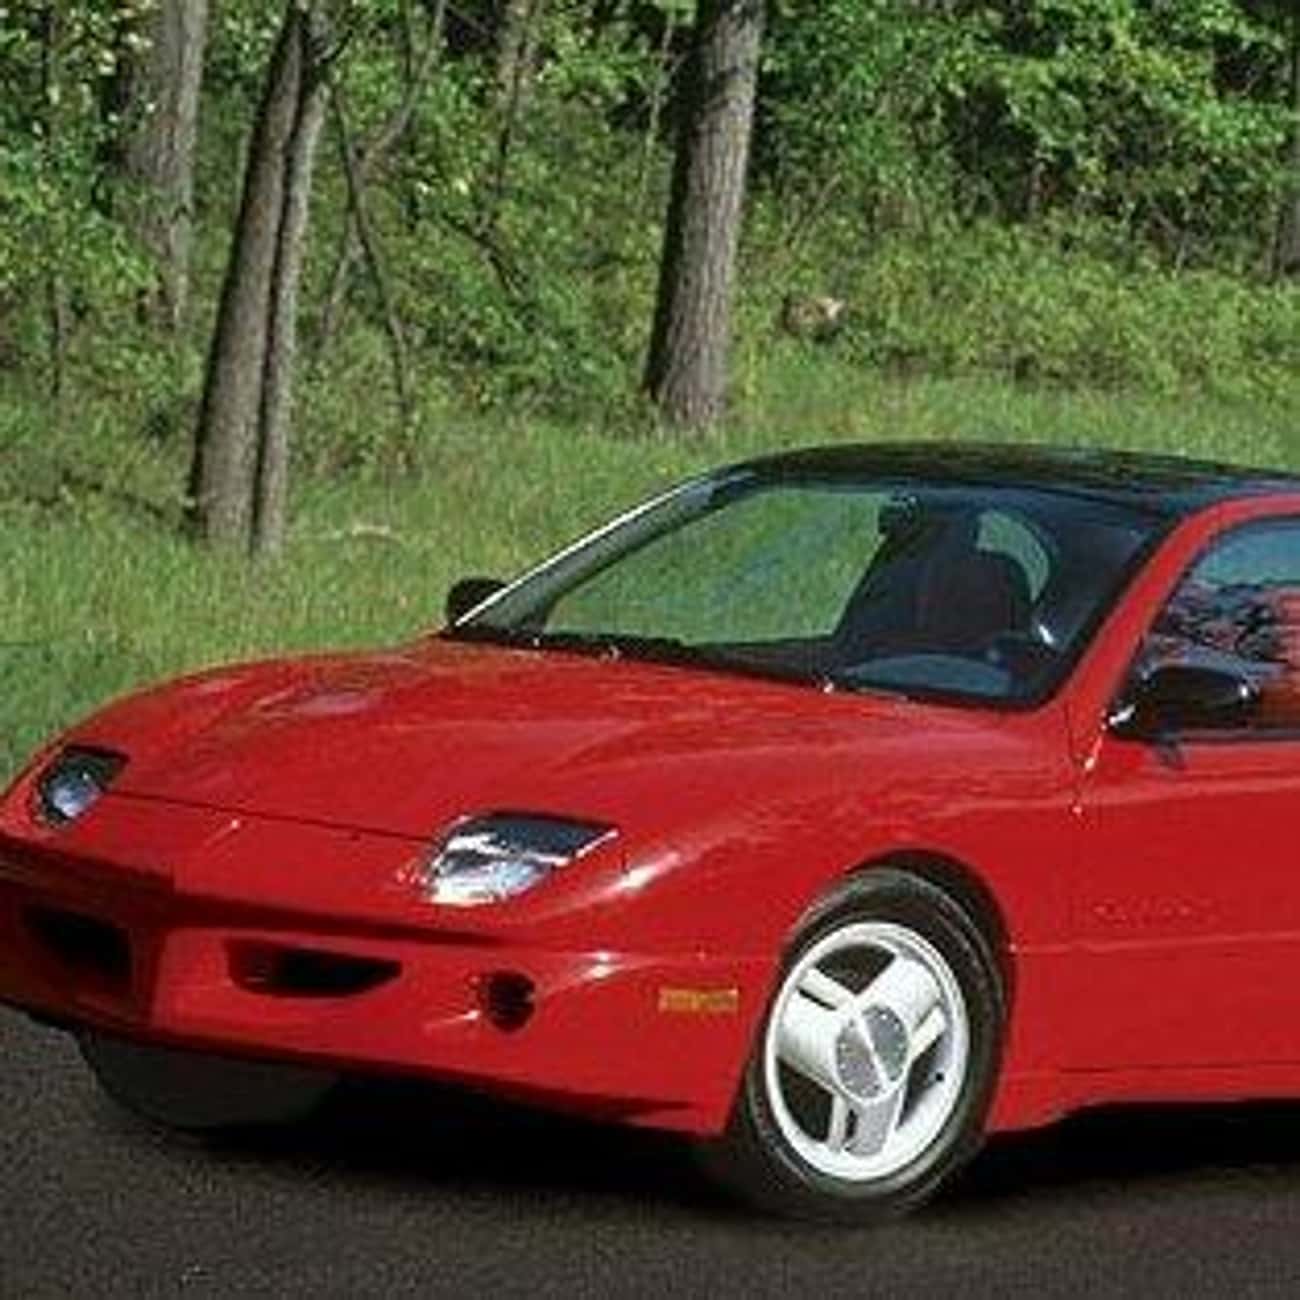 1996 Pontiac Sunfire Sedan